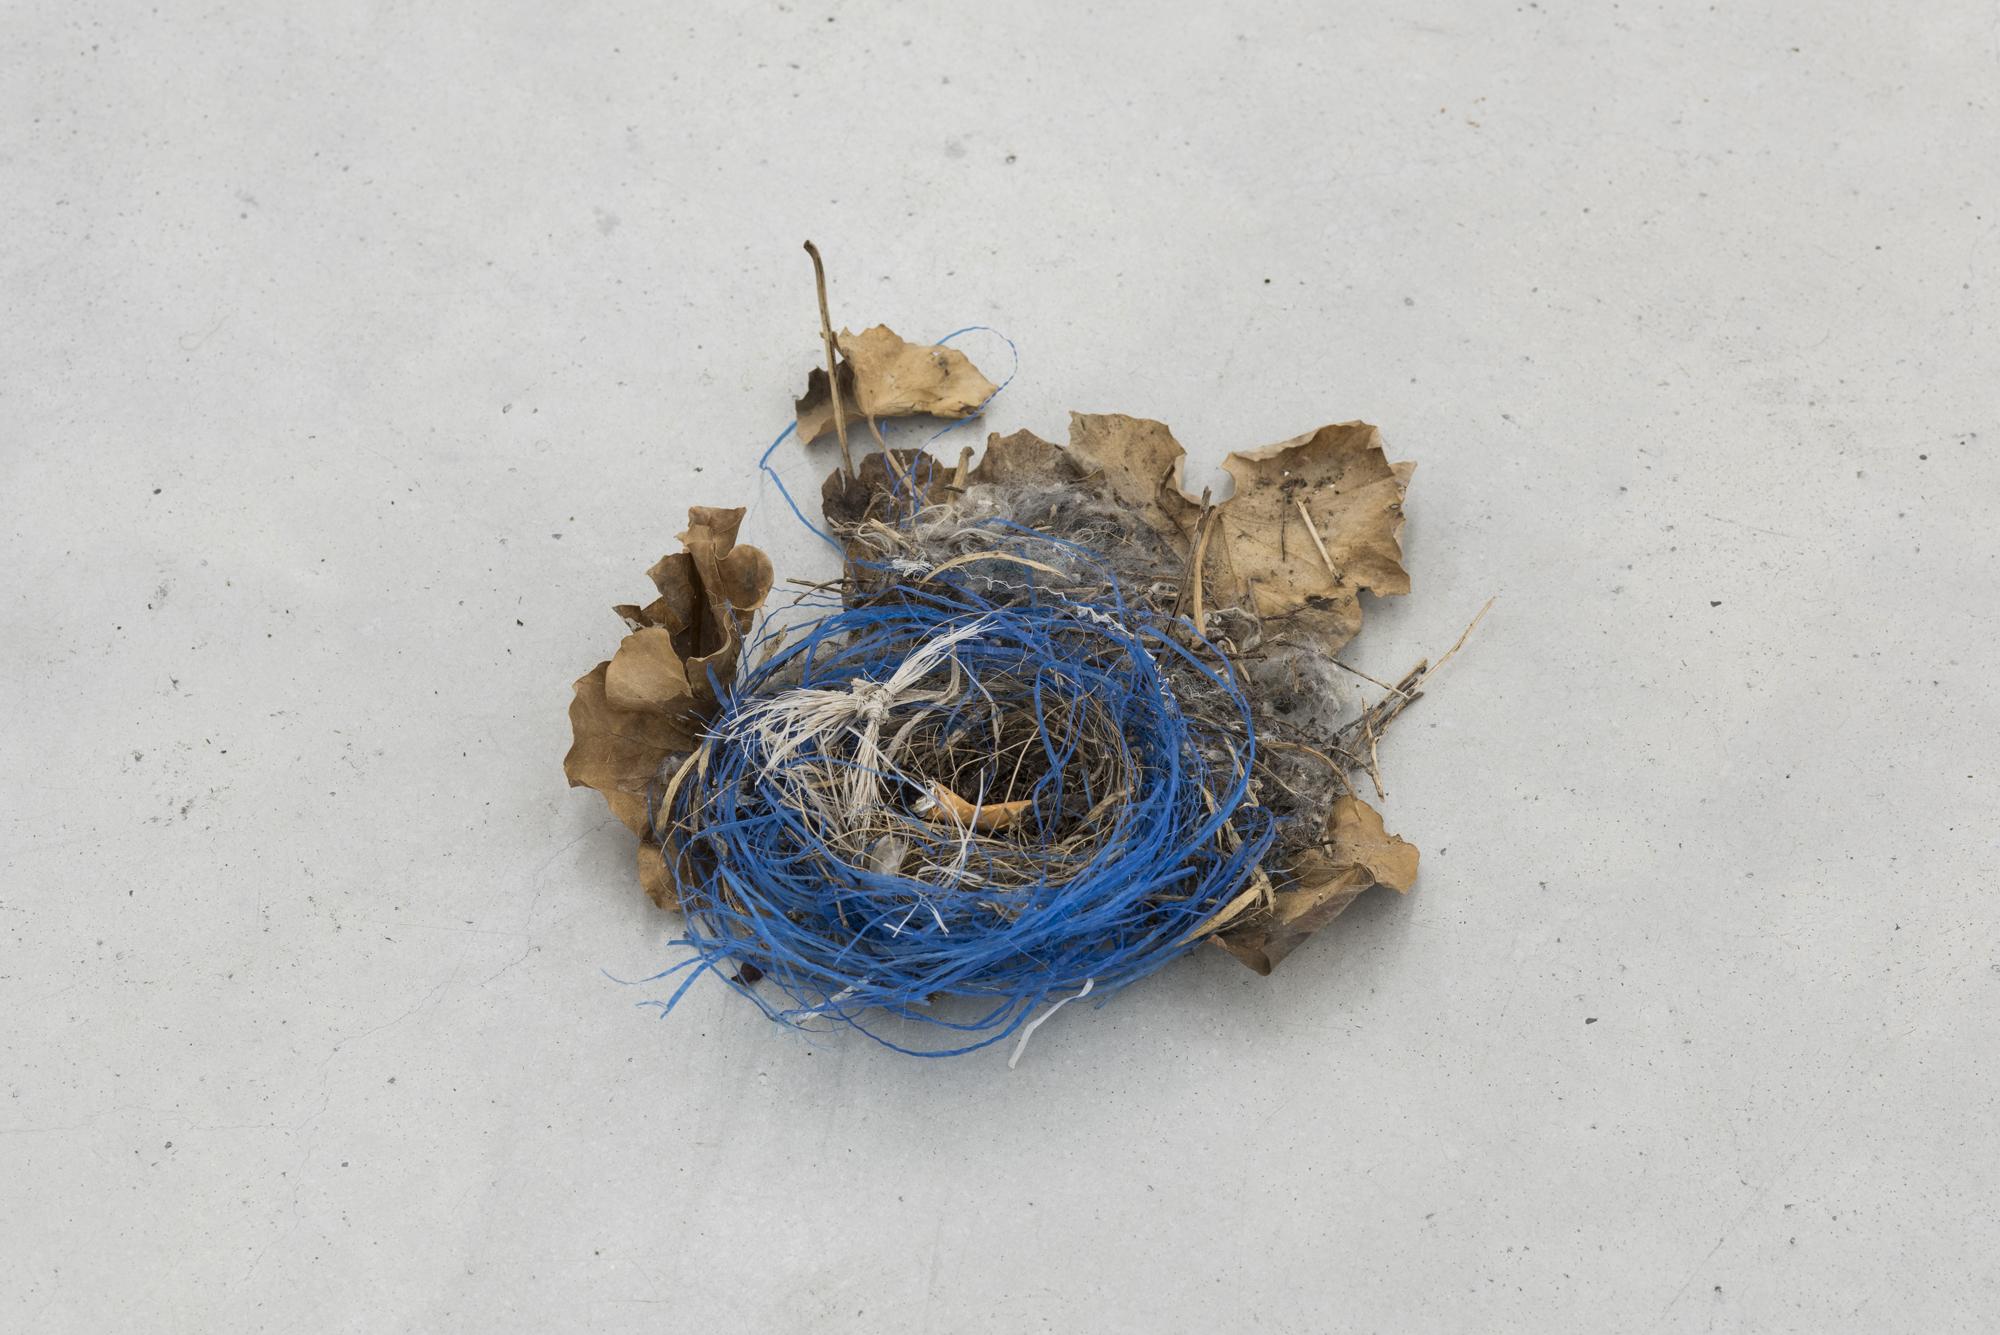 Ariel Schlesinger, Untitled (nest), 2017, bird nest, cigarette buds, variable dimensions